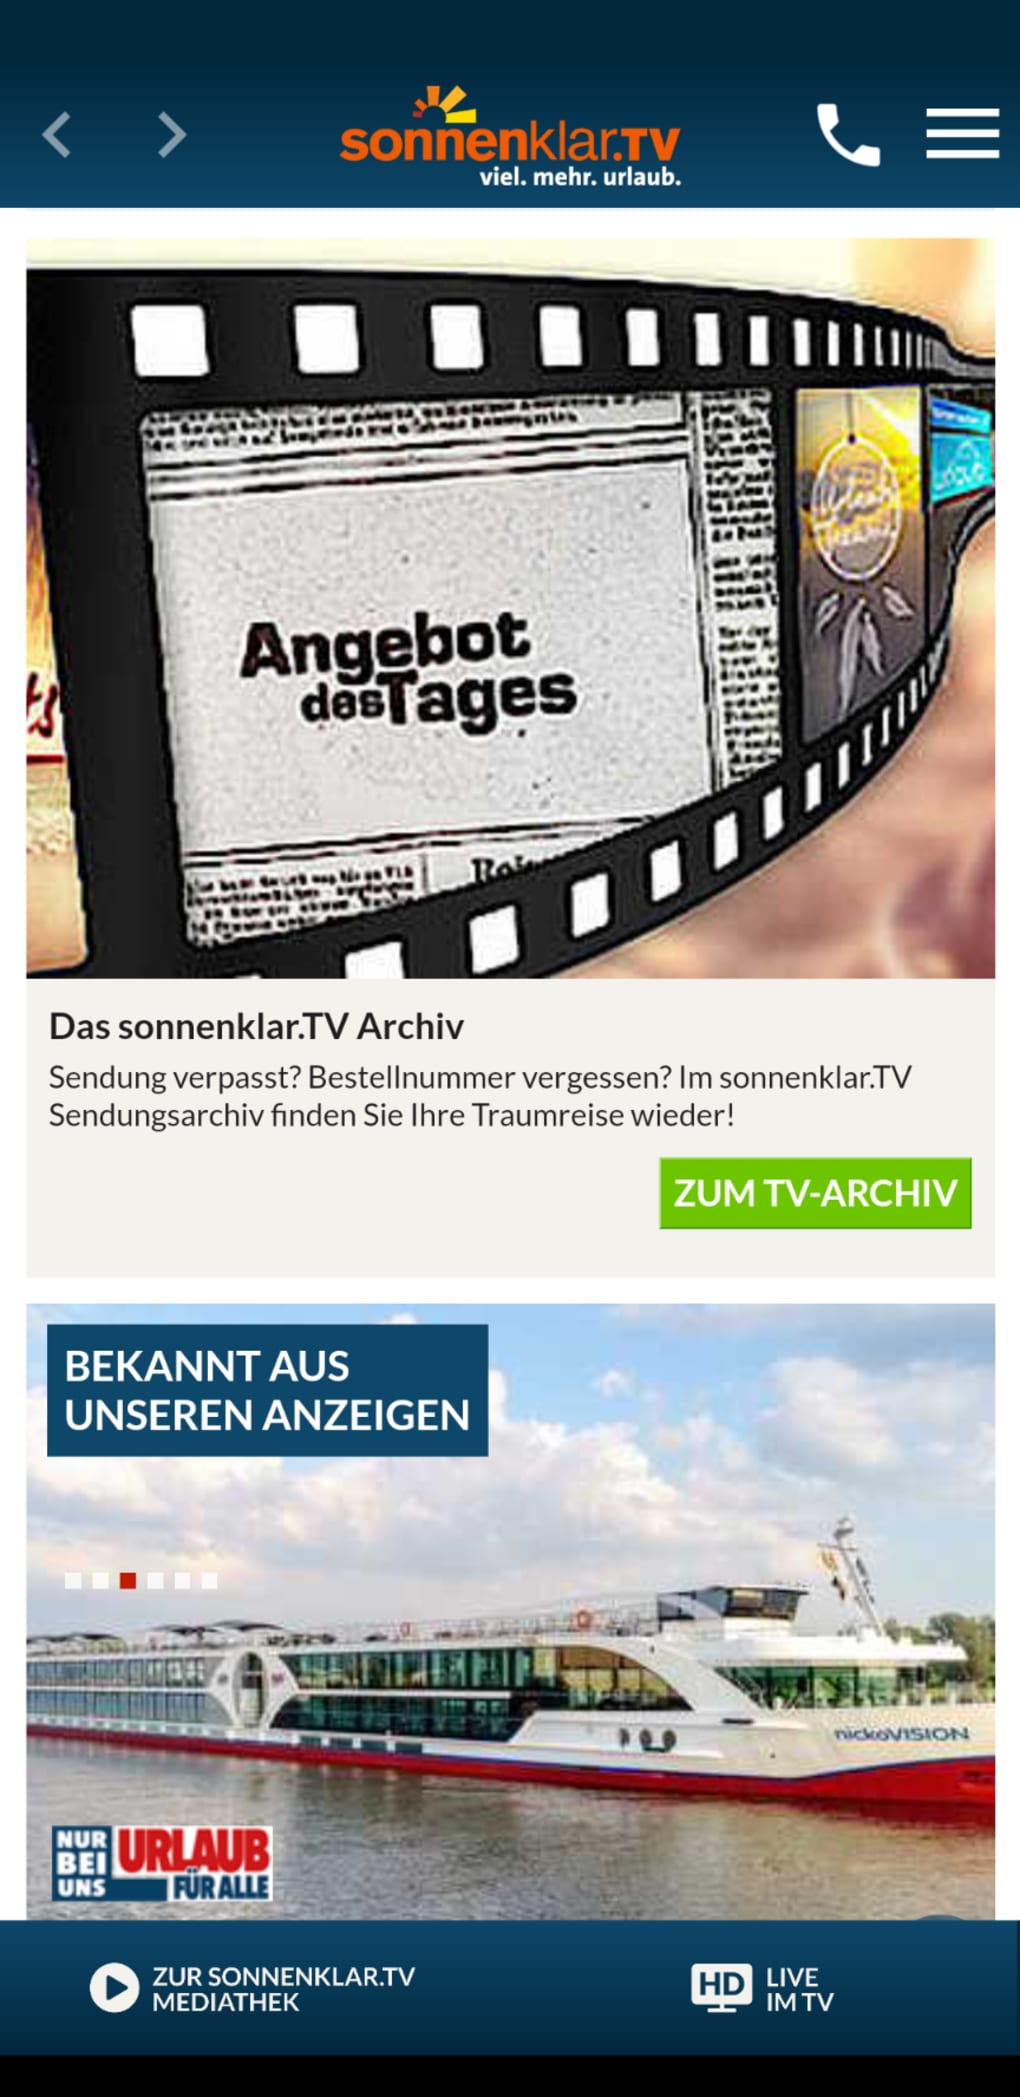 sonnenklar.TV Günstig Reisen APK para Android - Download